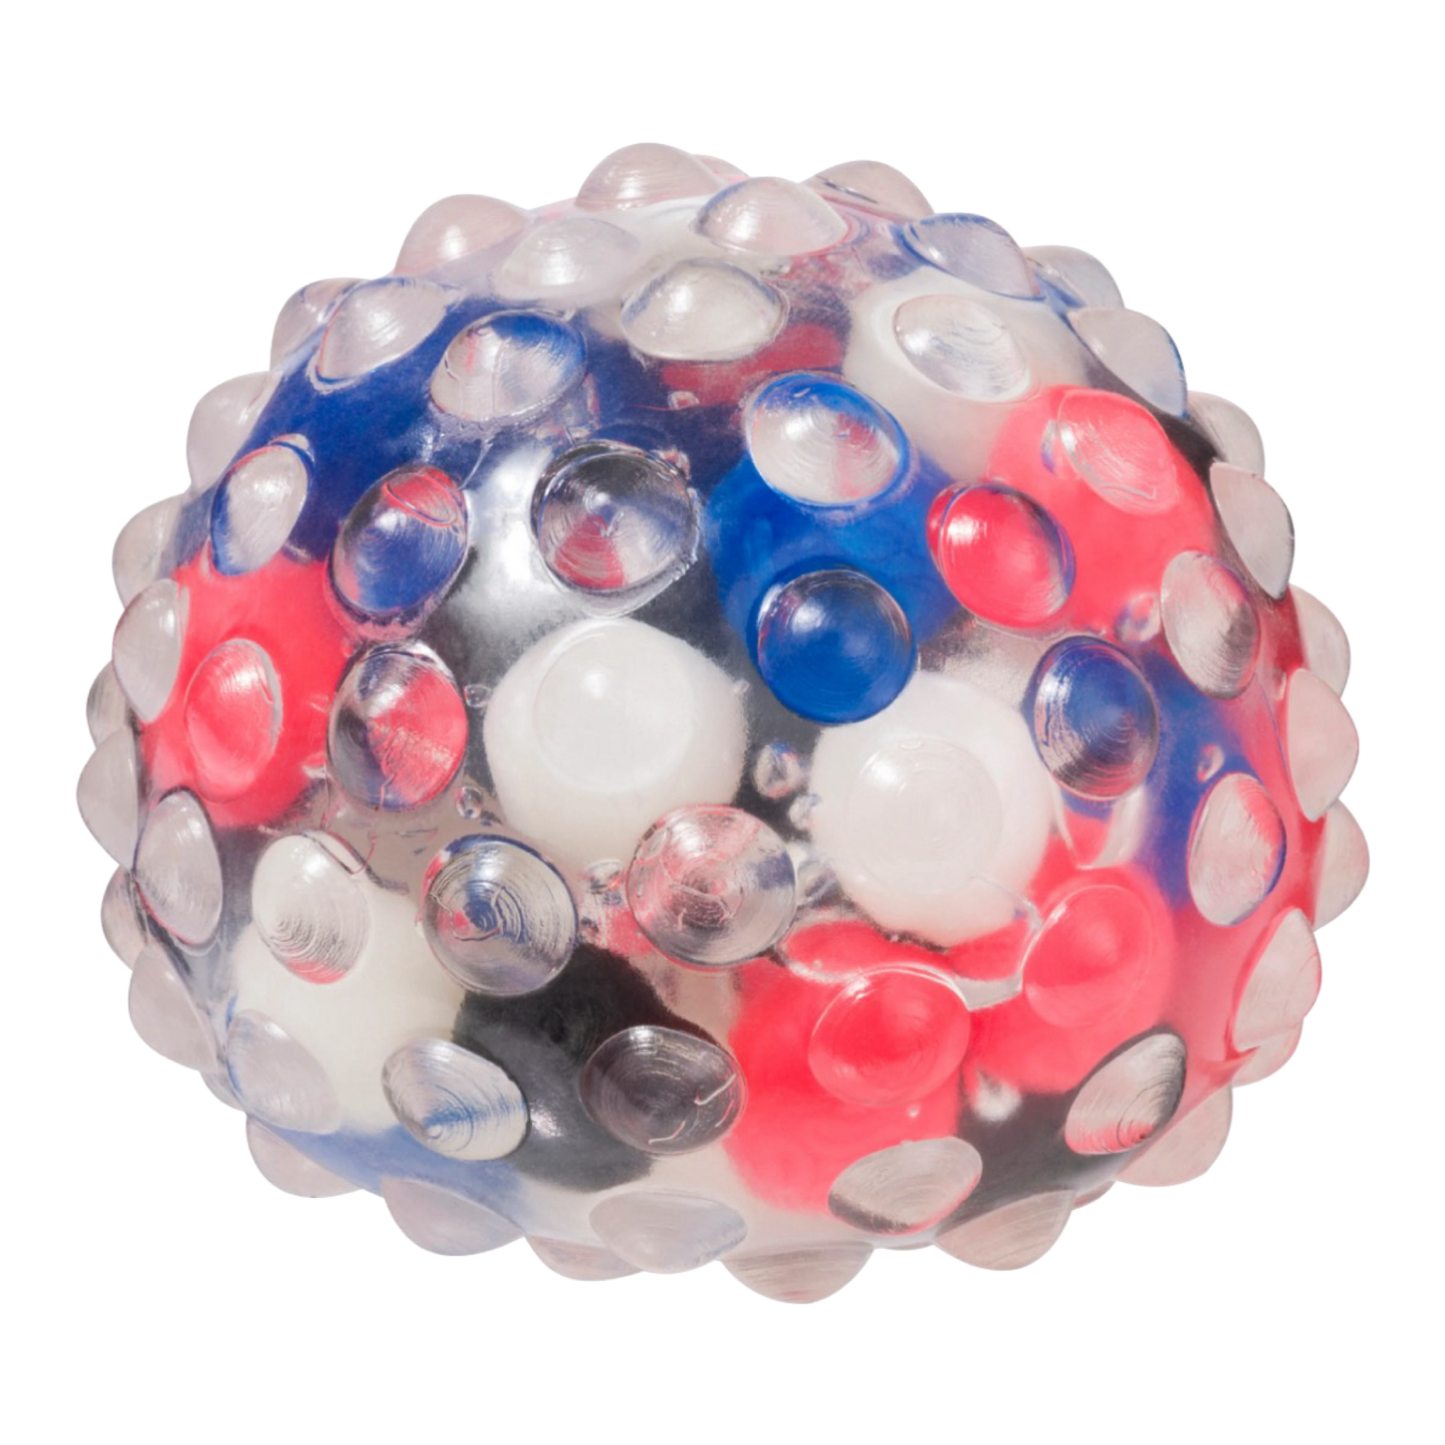 Molecular Squish Ball